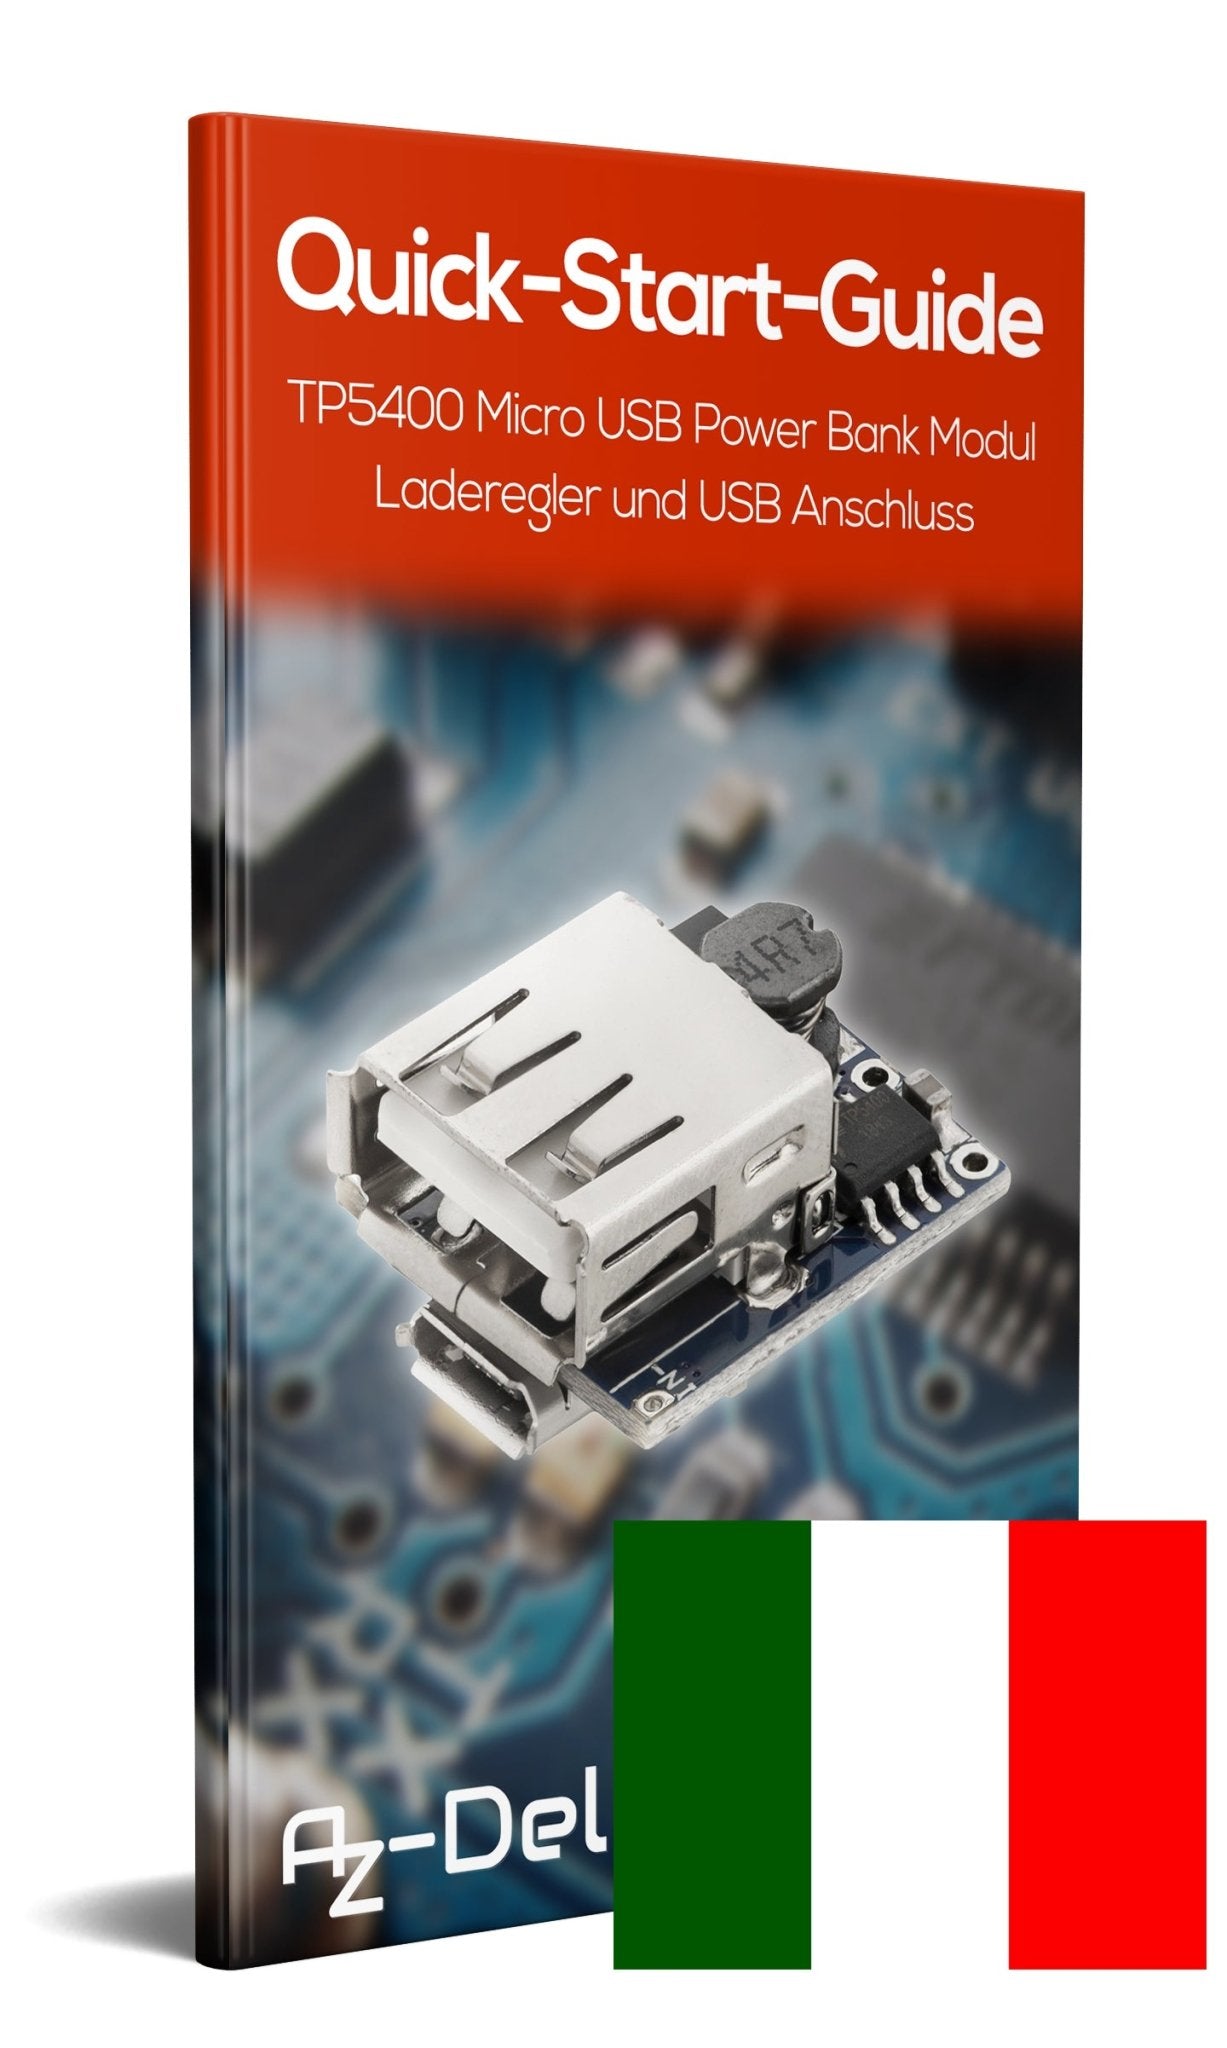 TP5400 Micro USB Power Bank Modul Laderegler und USB Anschluss - AZ-Delivery